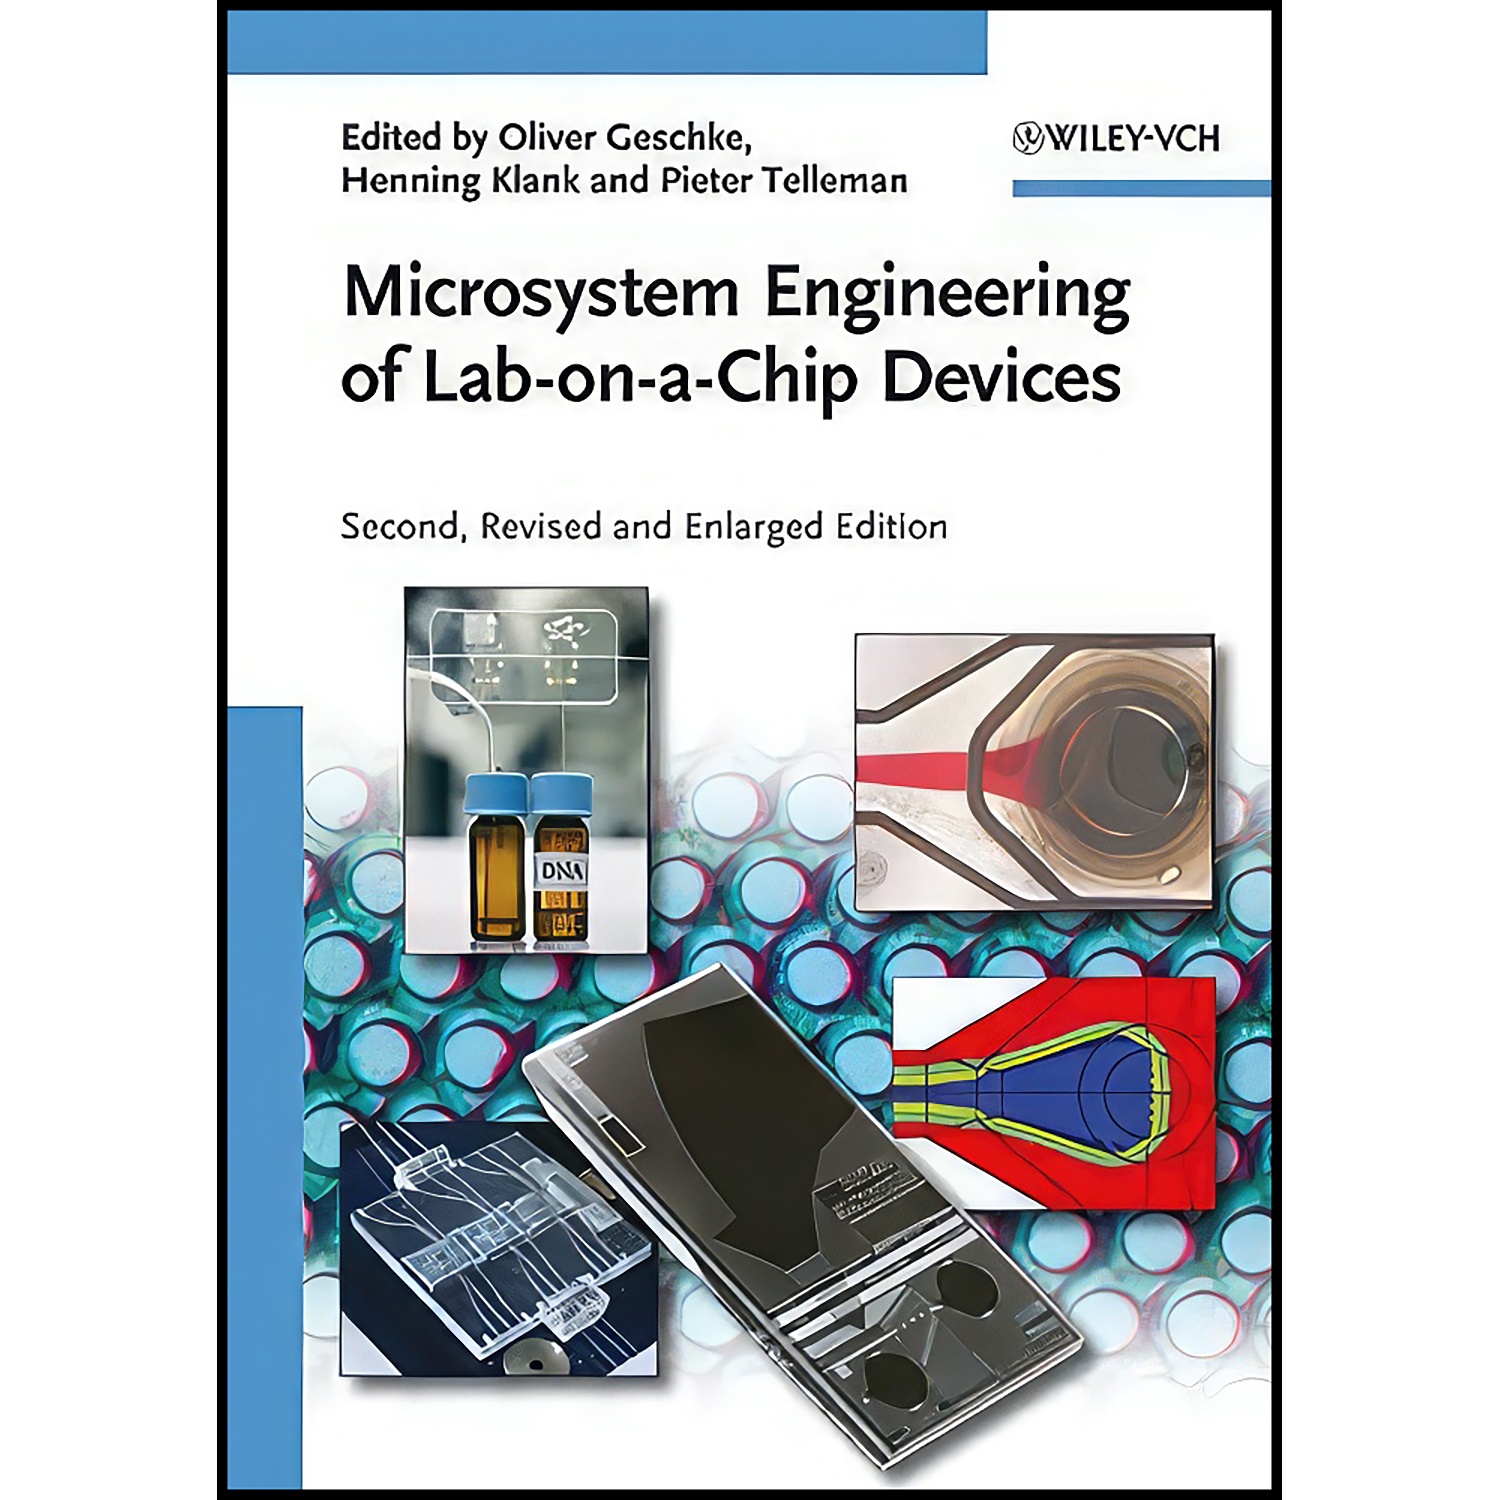 کتاب Microsystem Engineering of Lab-on-a-Chip Devices اثر جمعي از نويسندگان انتشارات Wiley-VCH